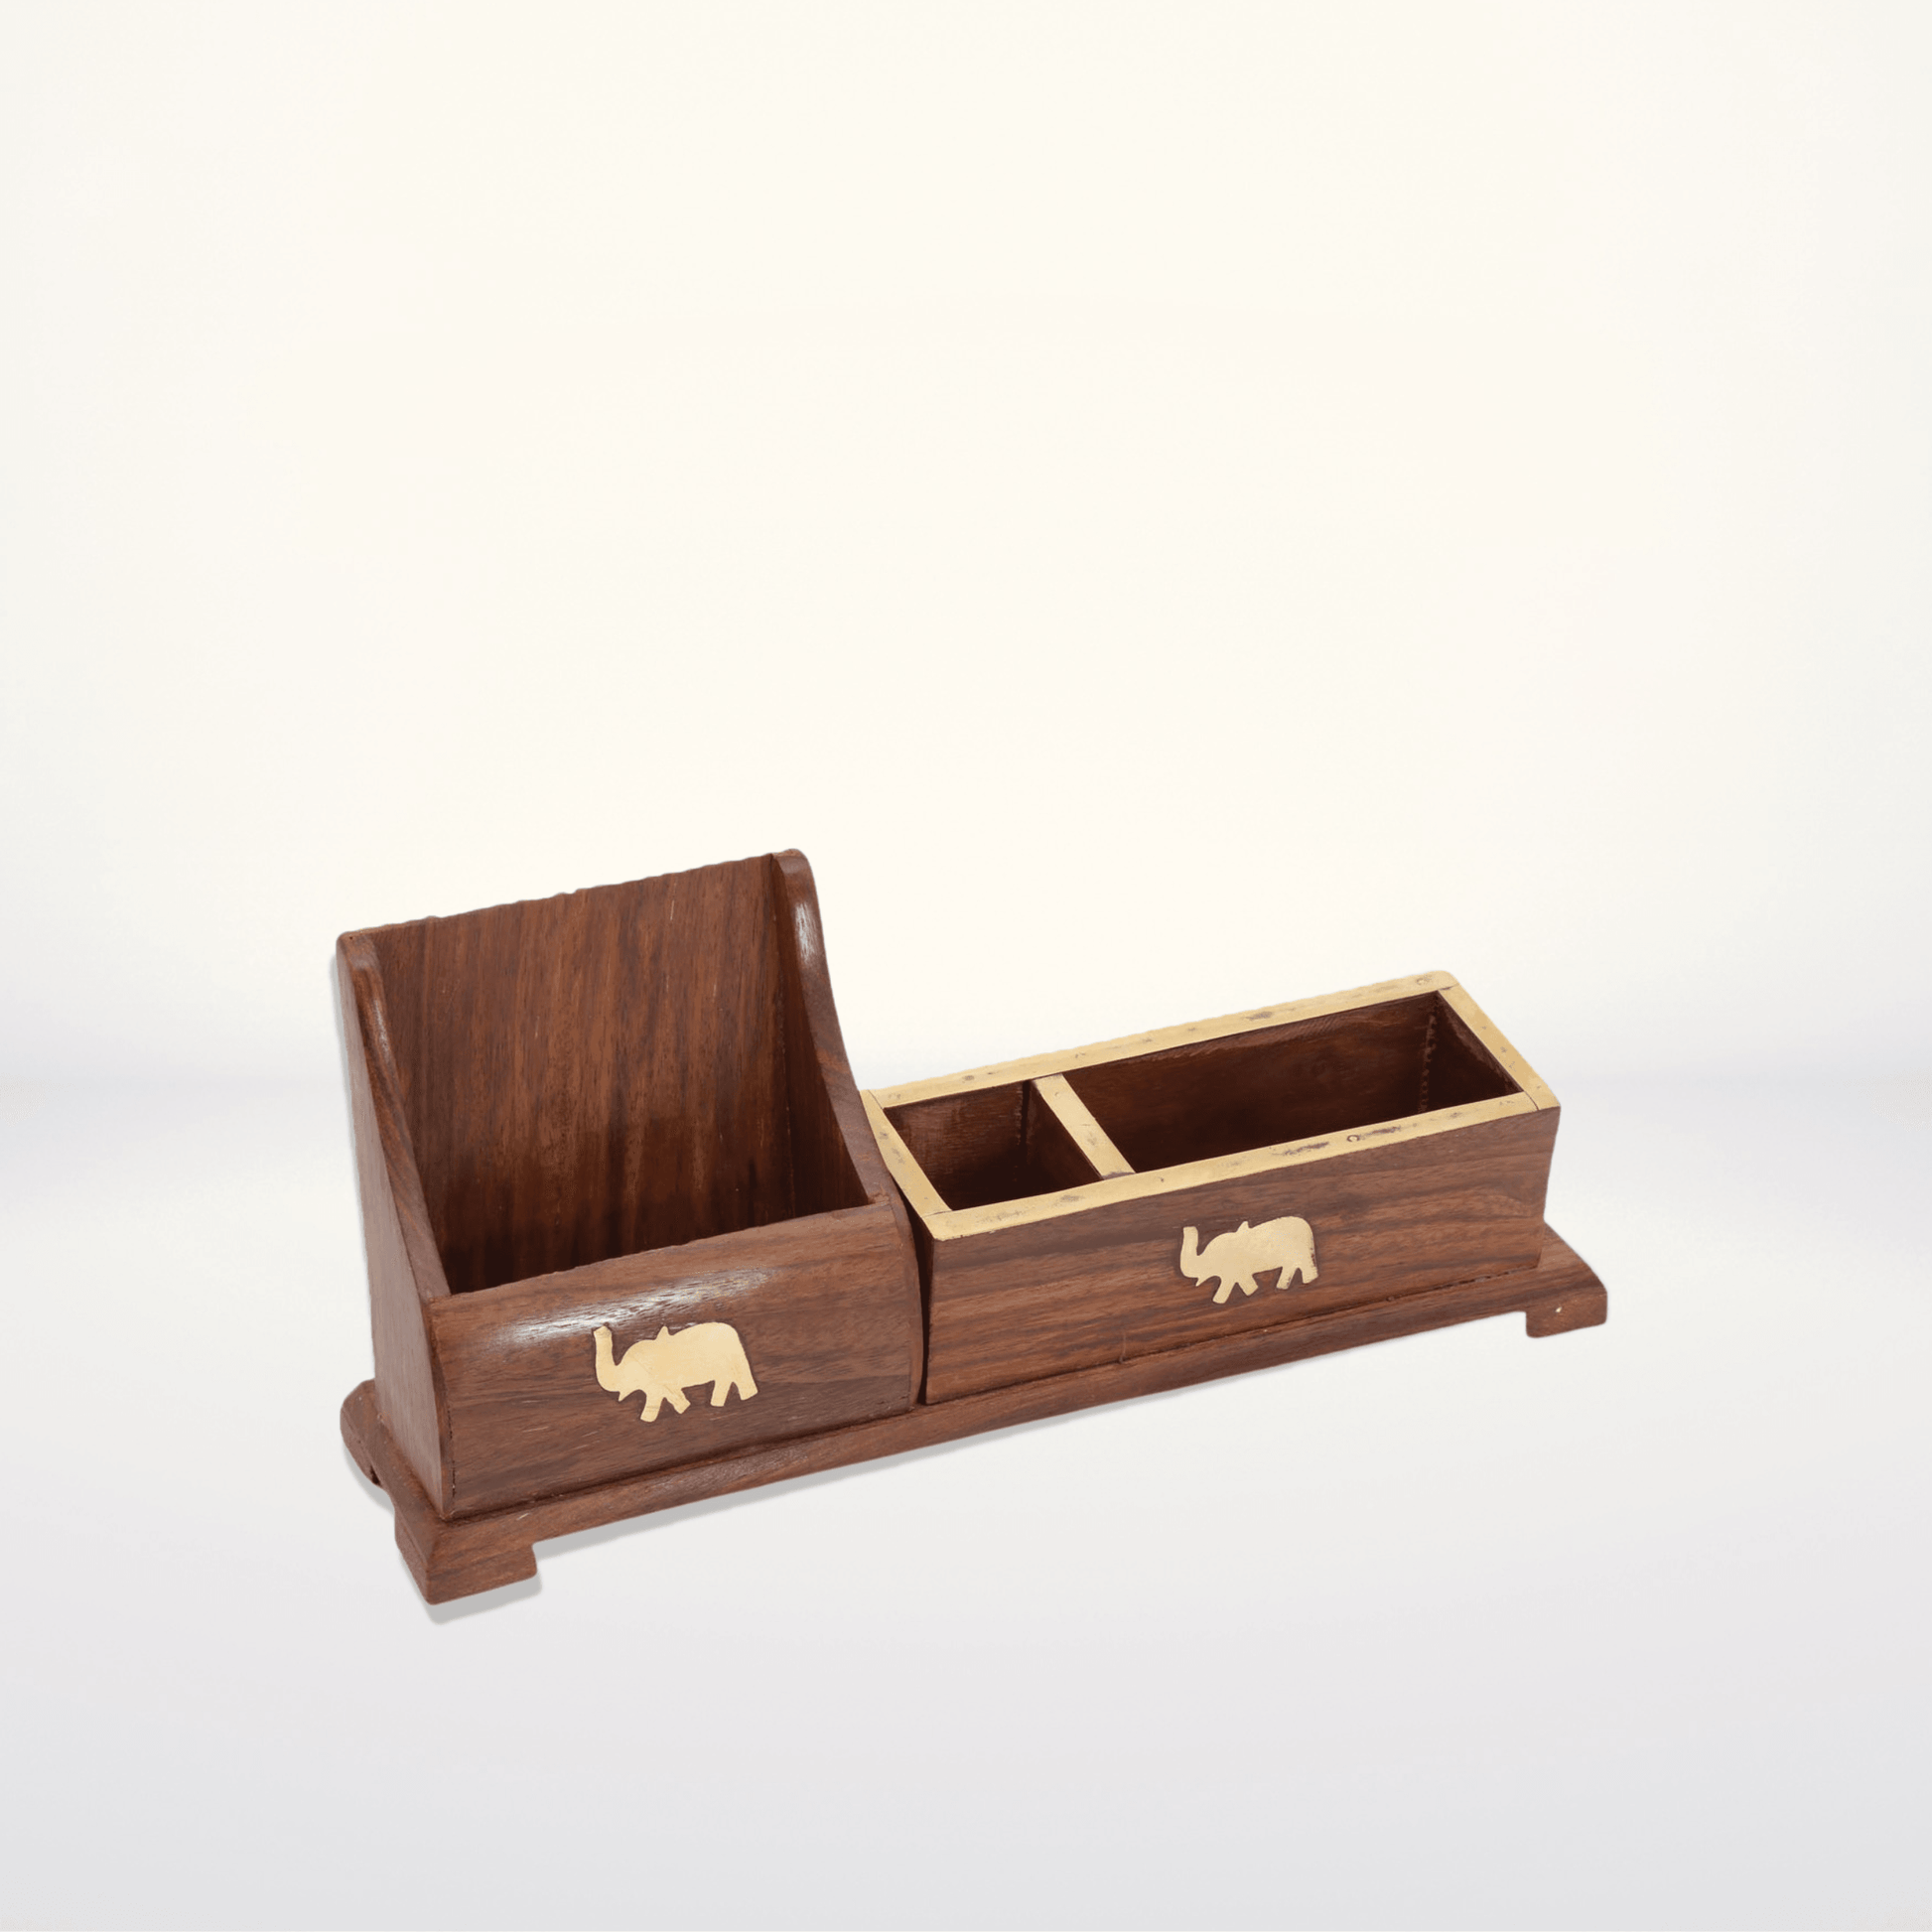 Wooden Desk Organiser with Elephant Design - Stylla London